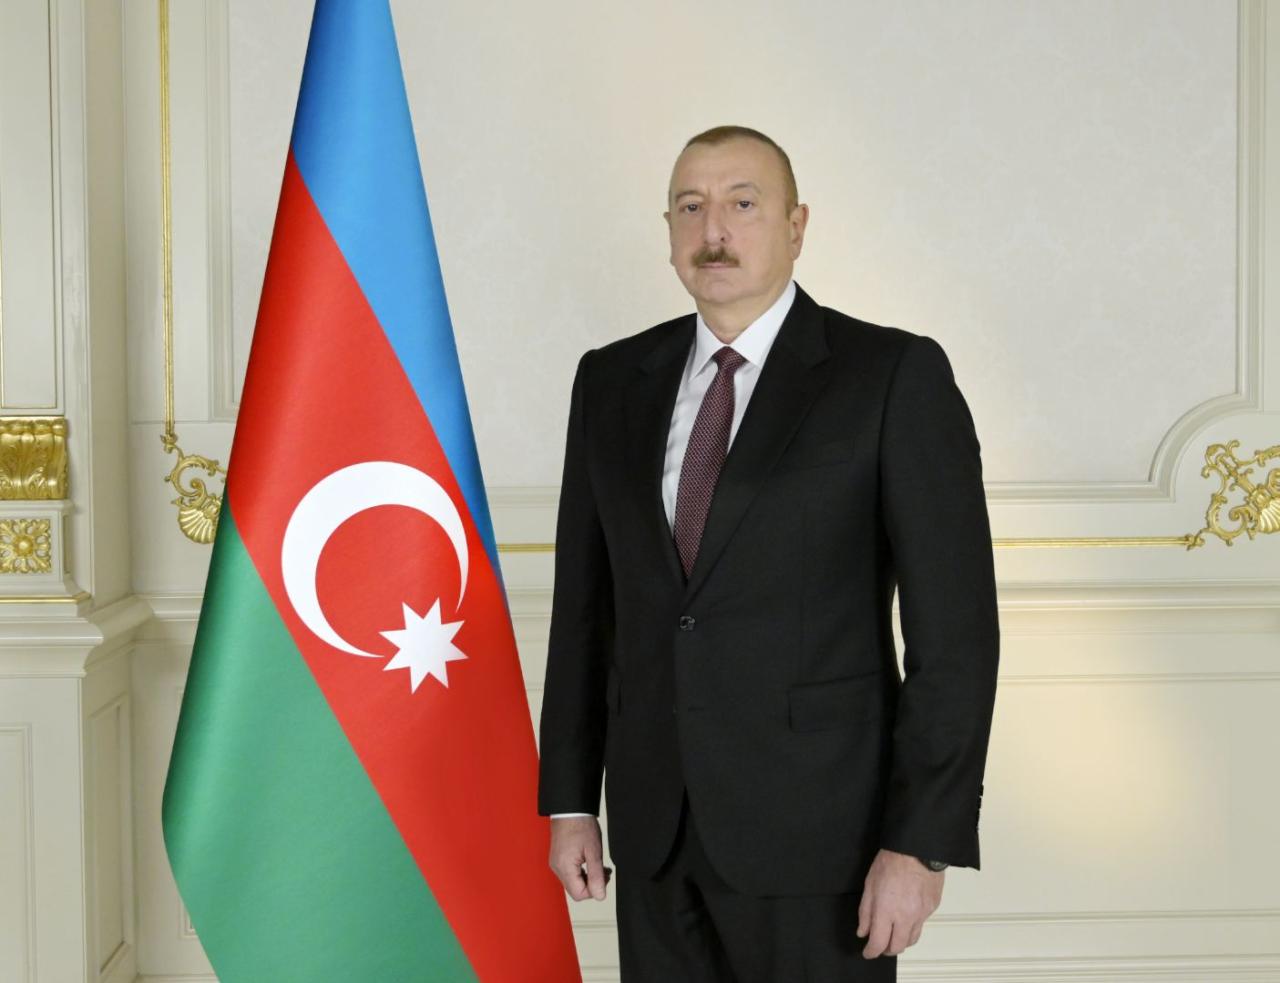 President Aliyev hails Azerbaijan's former Prosecutor General